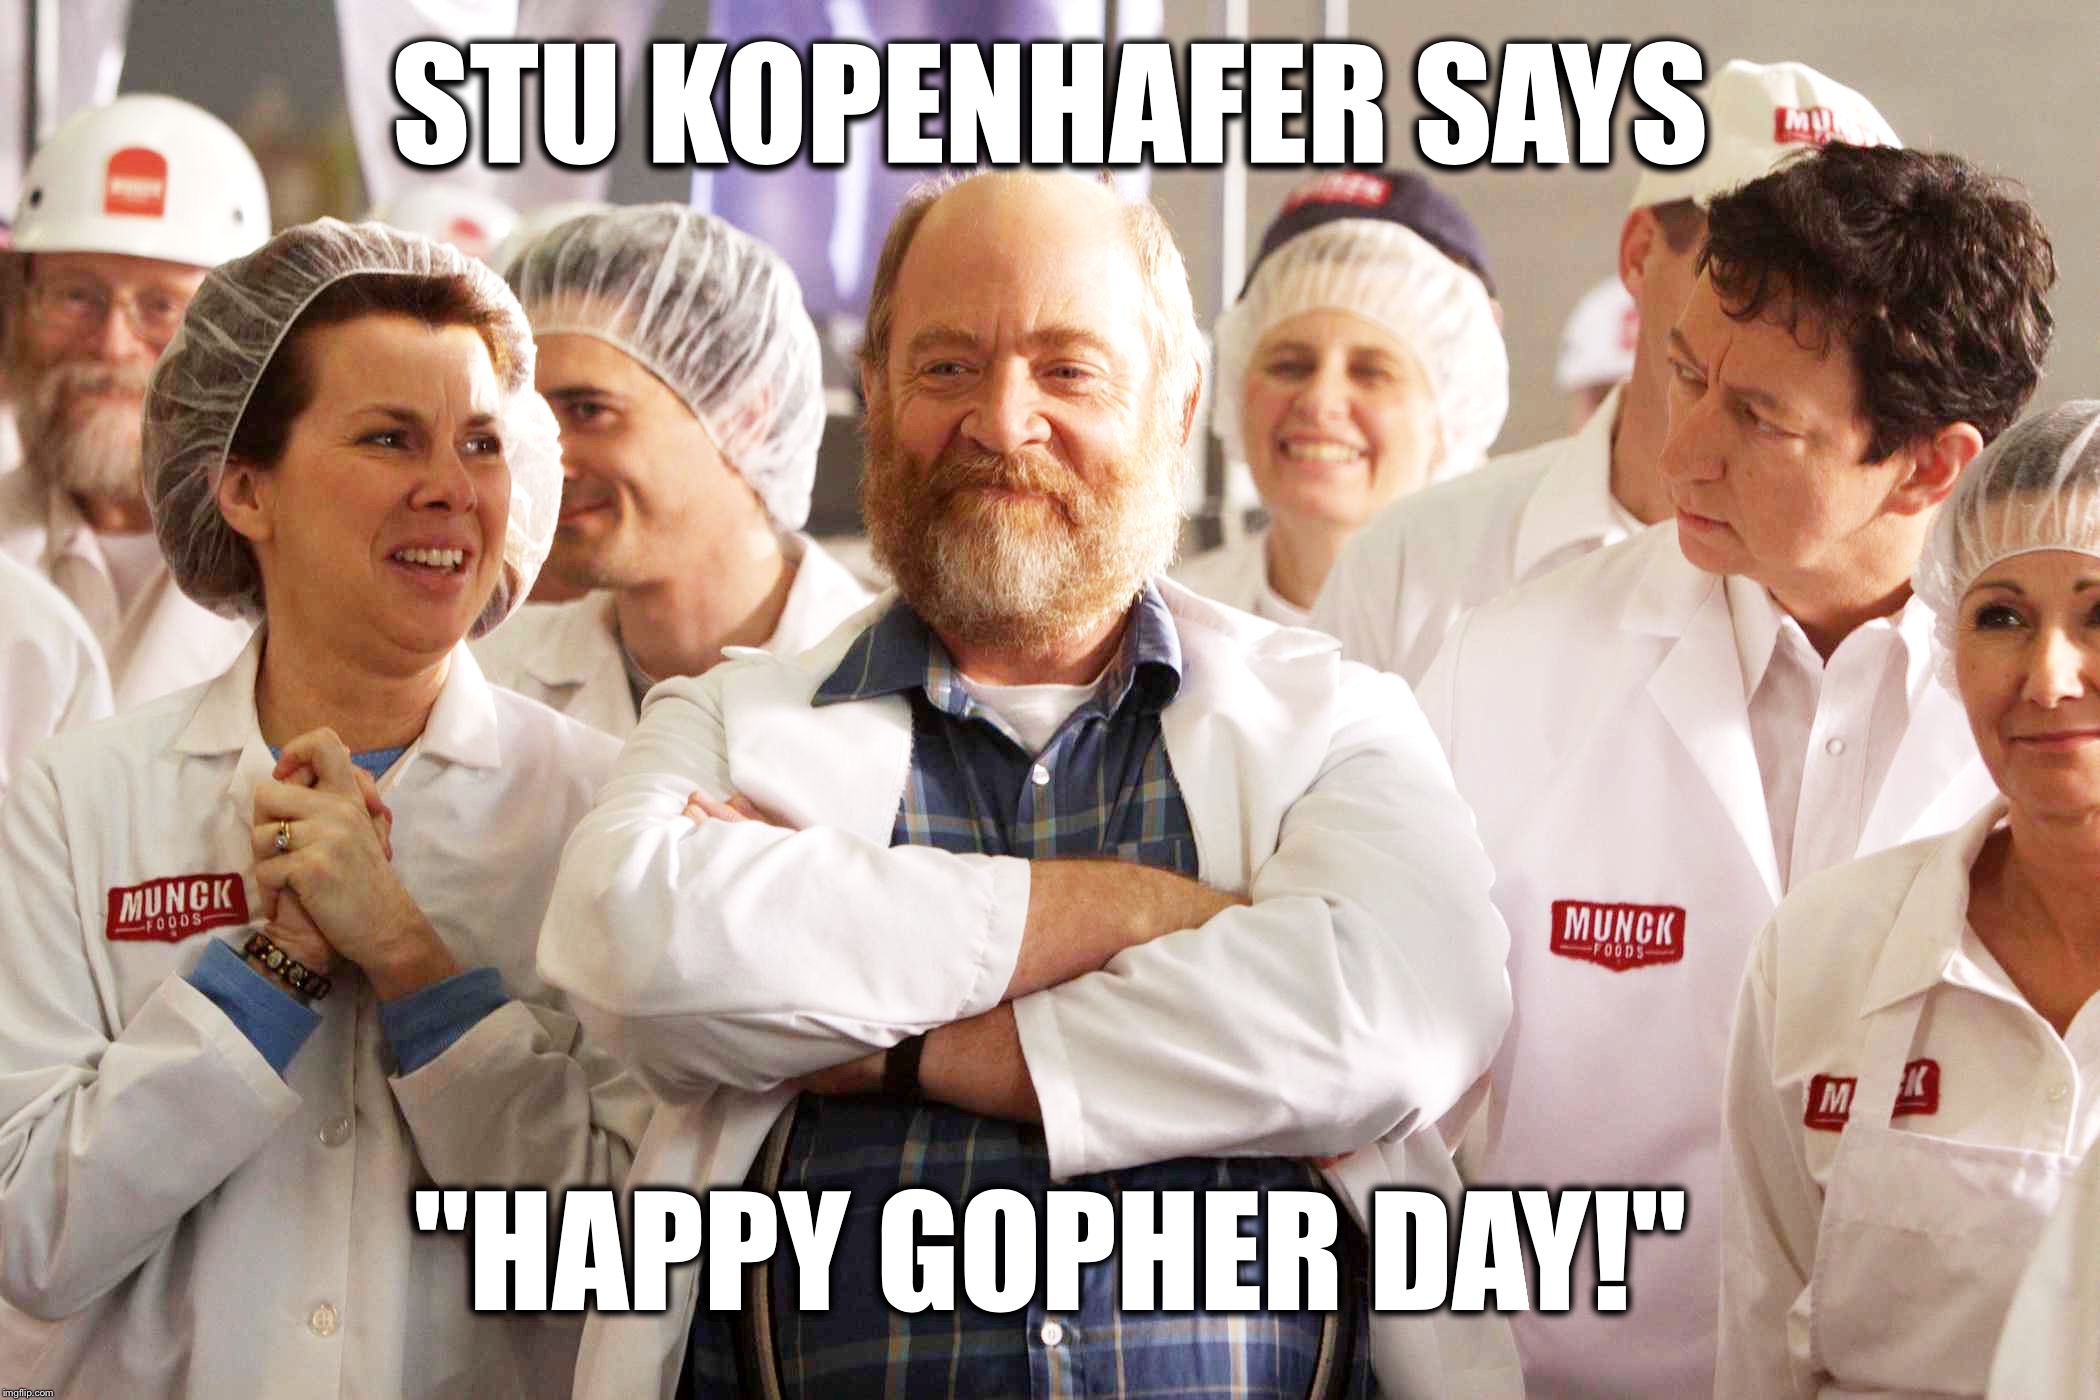 Happy Gopher Day | STU KOPENHAFER SAYS "HAPPY GOPHER DAY!" | image tagged in happy gopher day | made w/ Imgflip meme maker